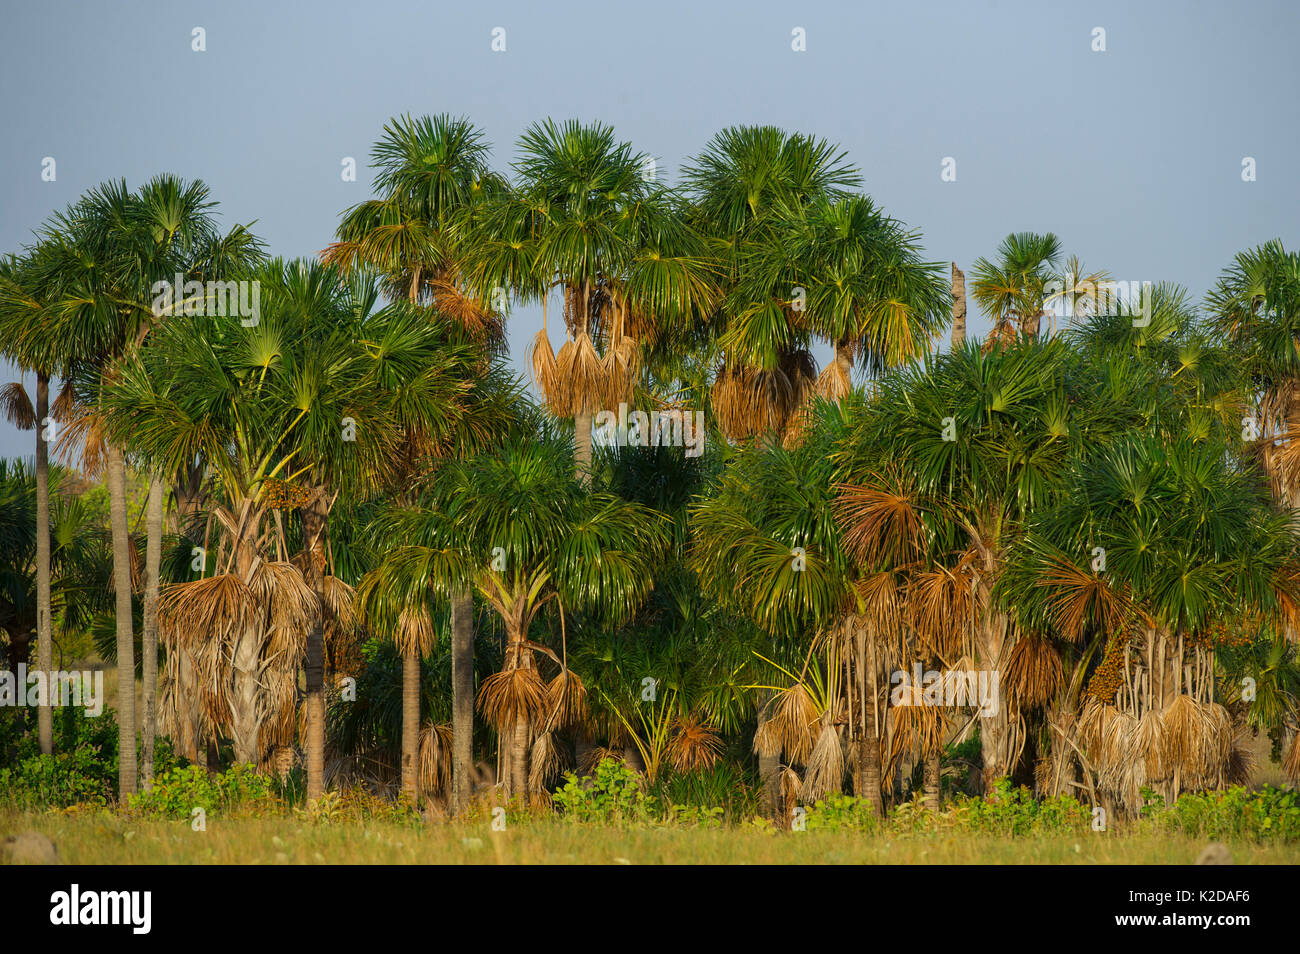 Mauritia / Moriche palm (Mauritia flexuosa) used for thatching, Rurununi savanna, Guyana, South America Stock Photo